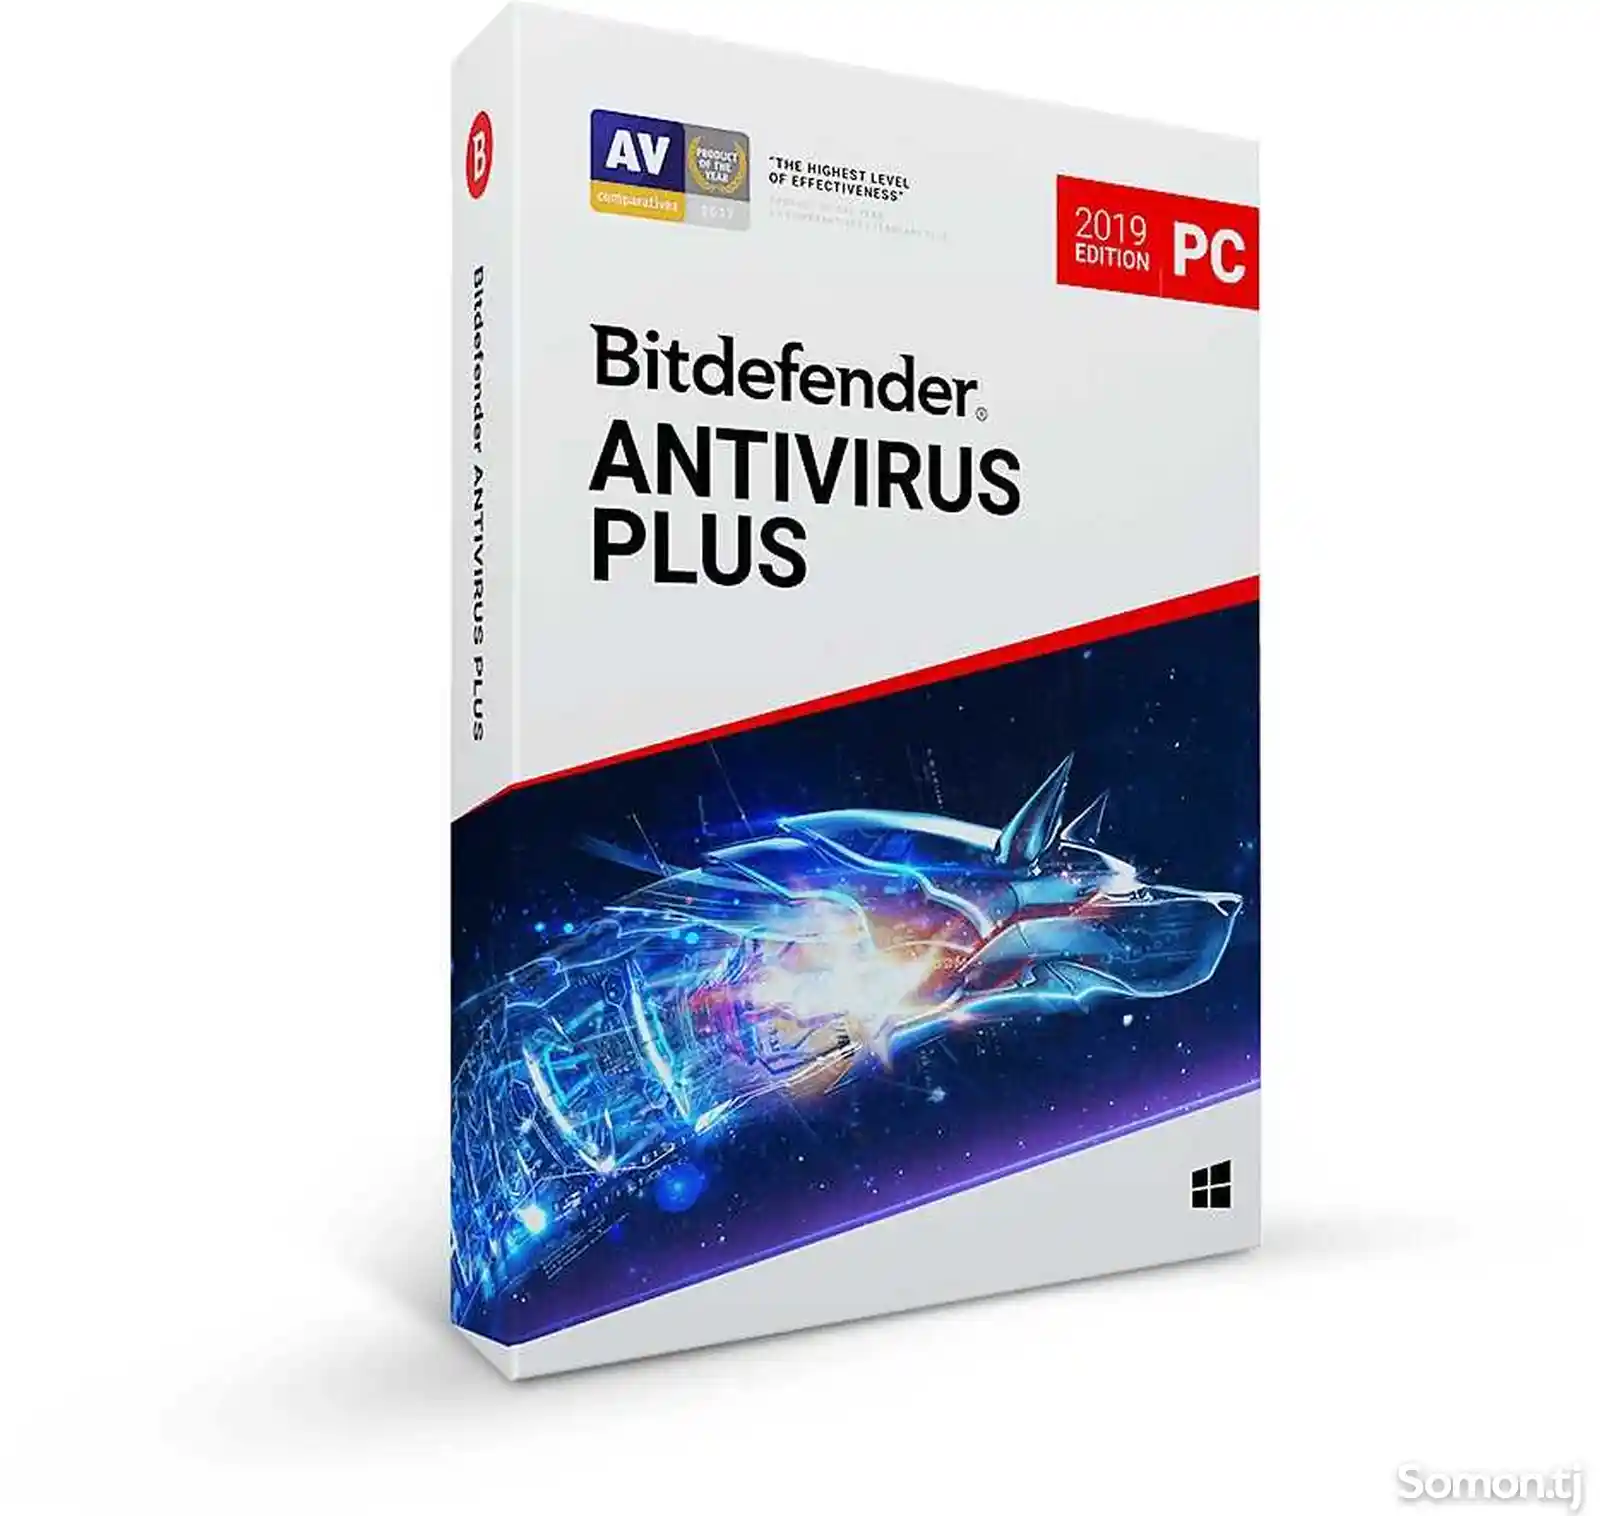 Bitdefender Antivirus Plus - иҷозатнома барои 5 роёна, 1 сол